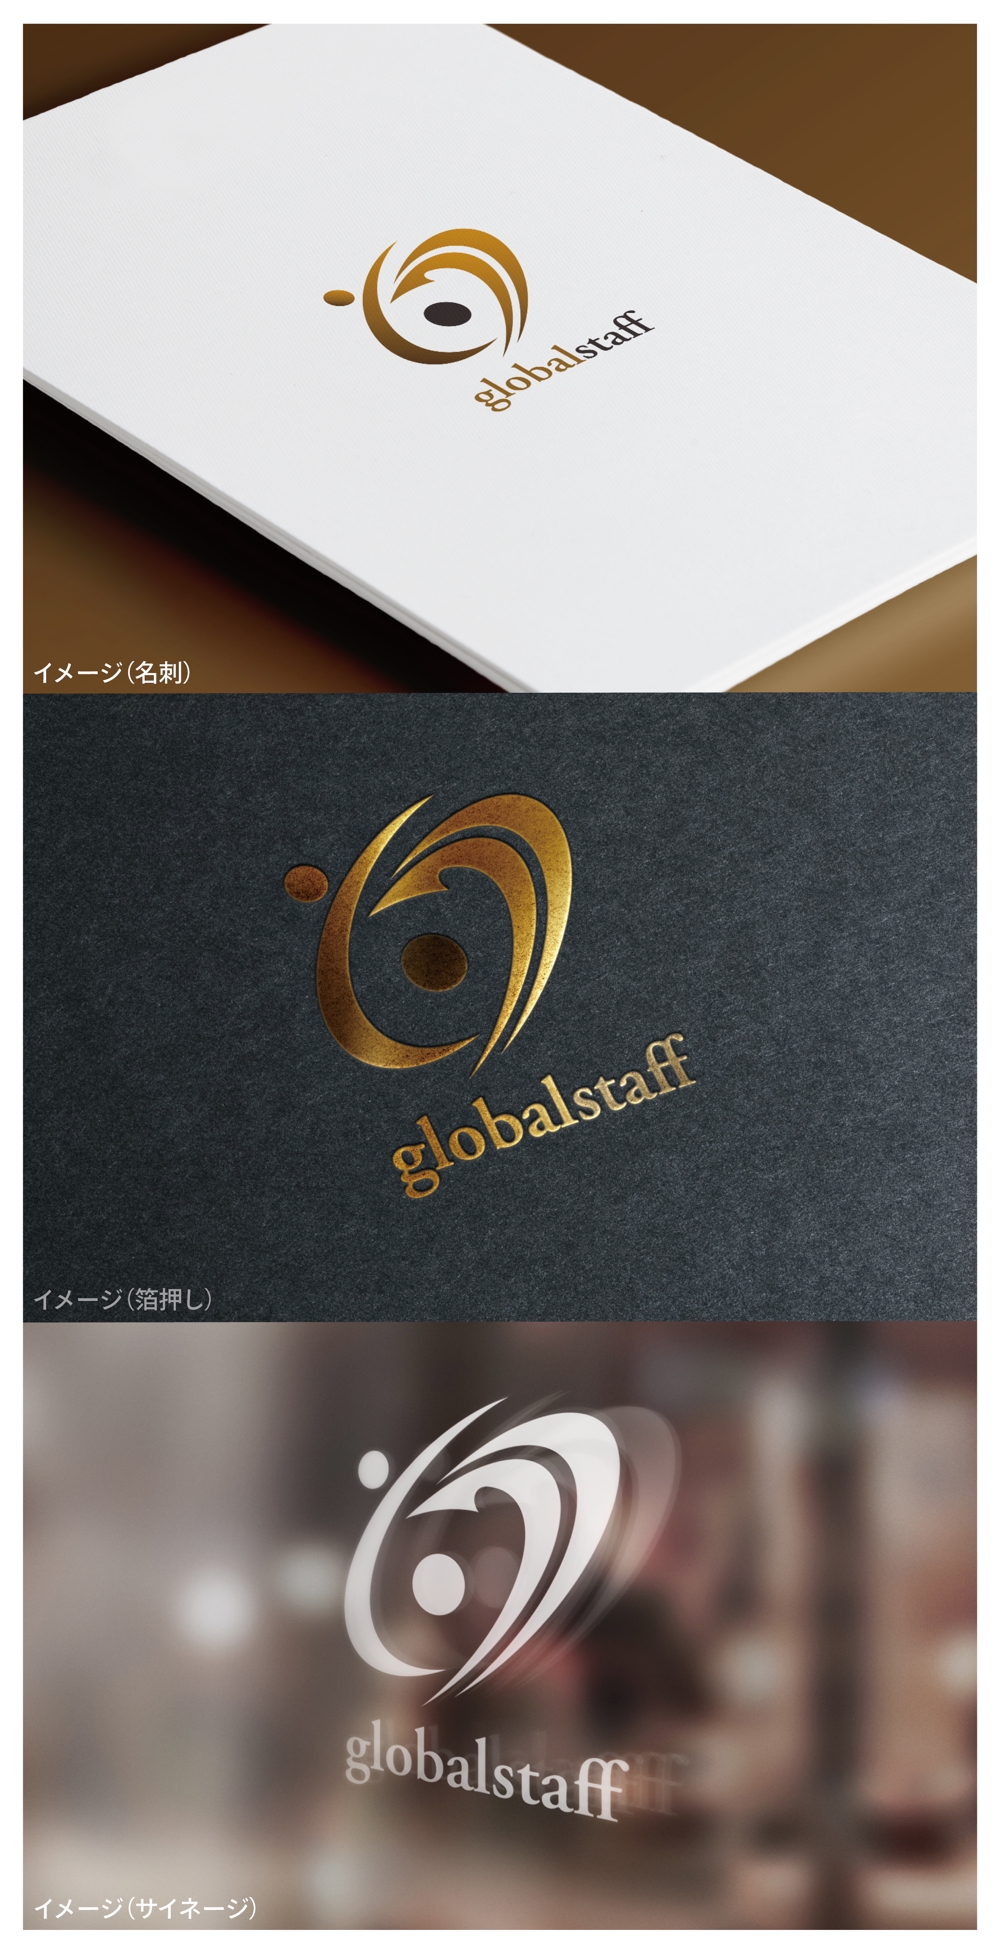 globalstaff_logo03_01.jpg